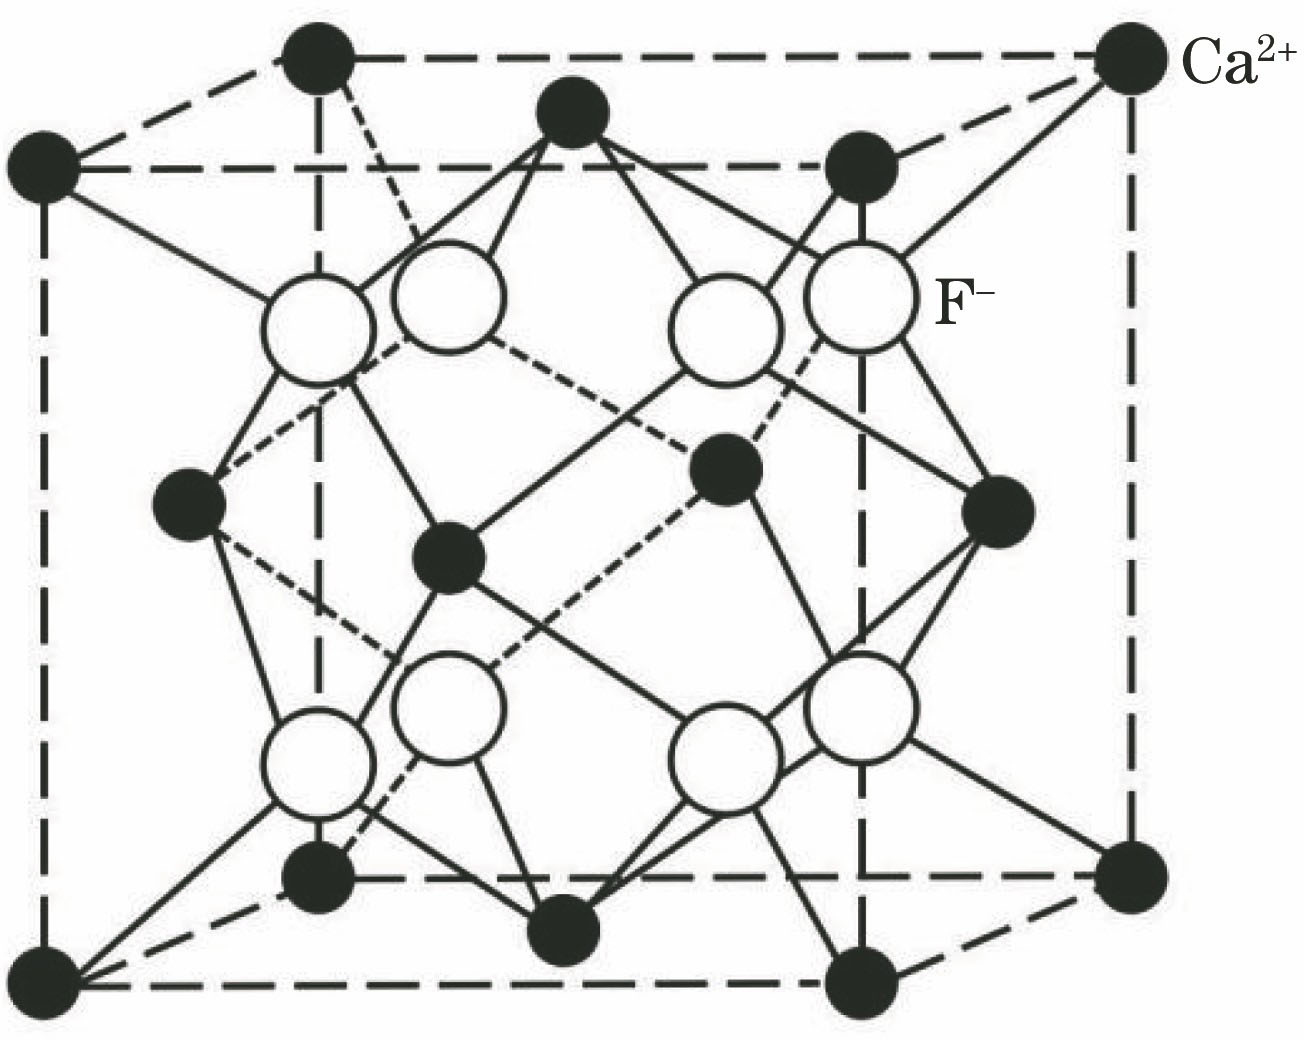 Structural diagram of CaF2 crystal